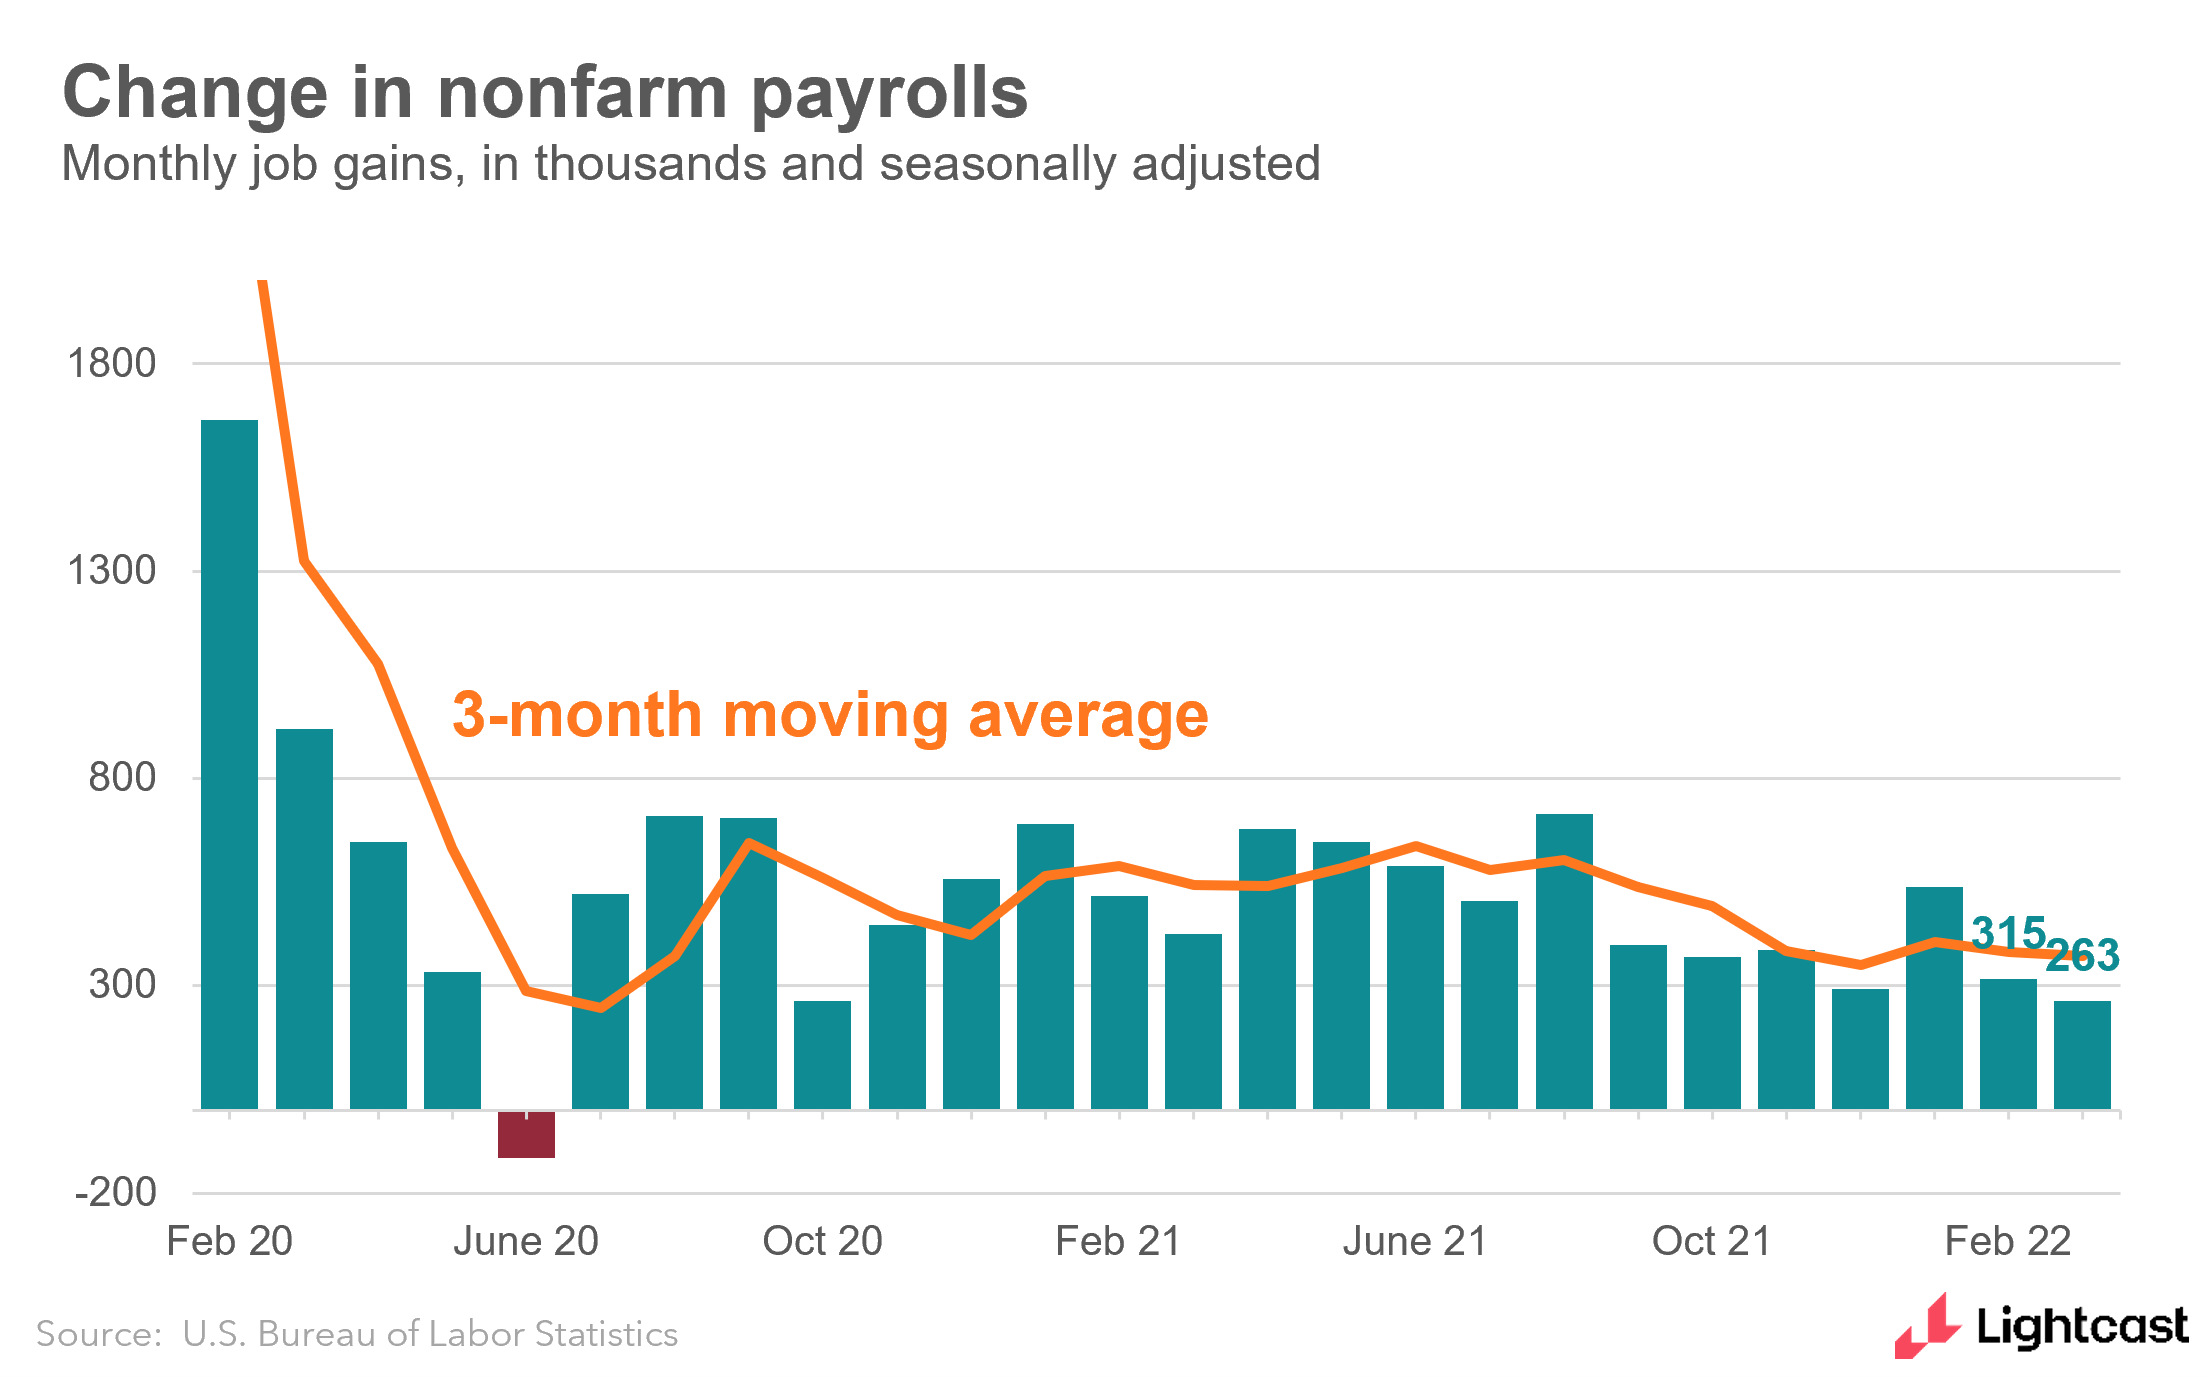 change in nonfarm payrolls over time